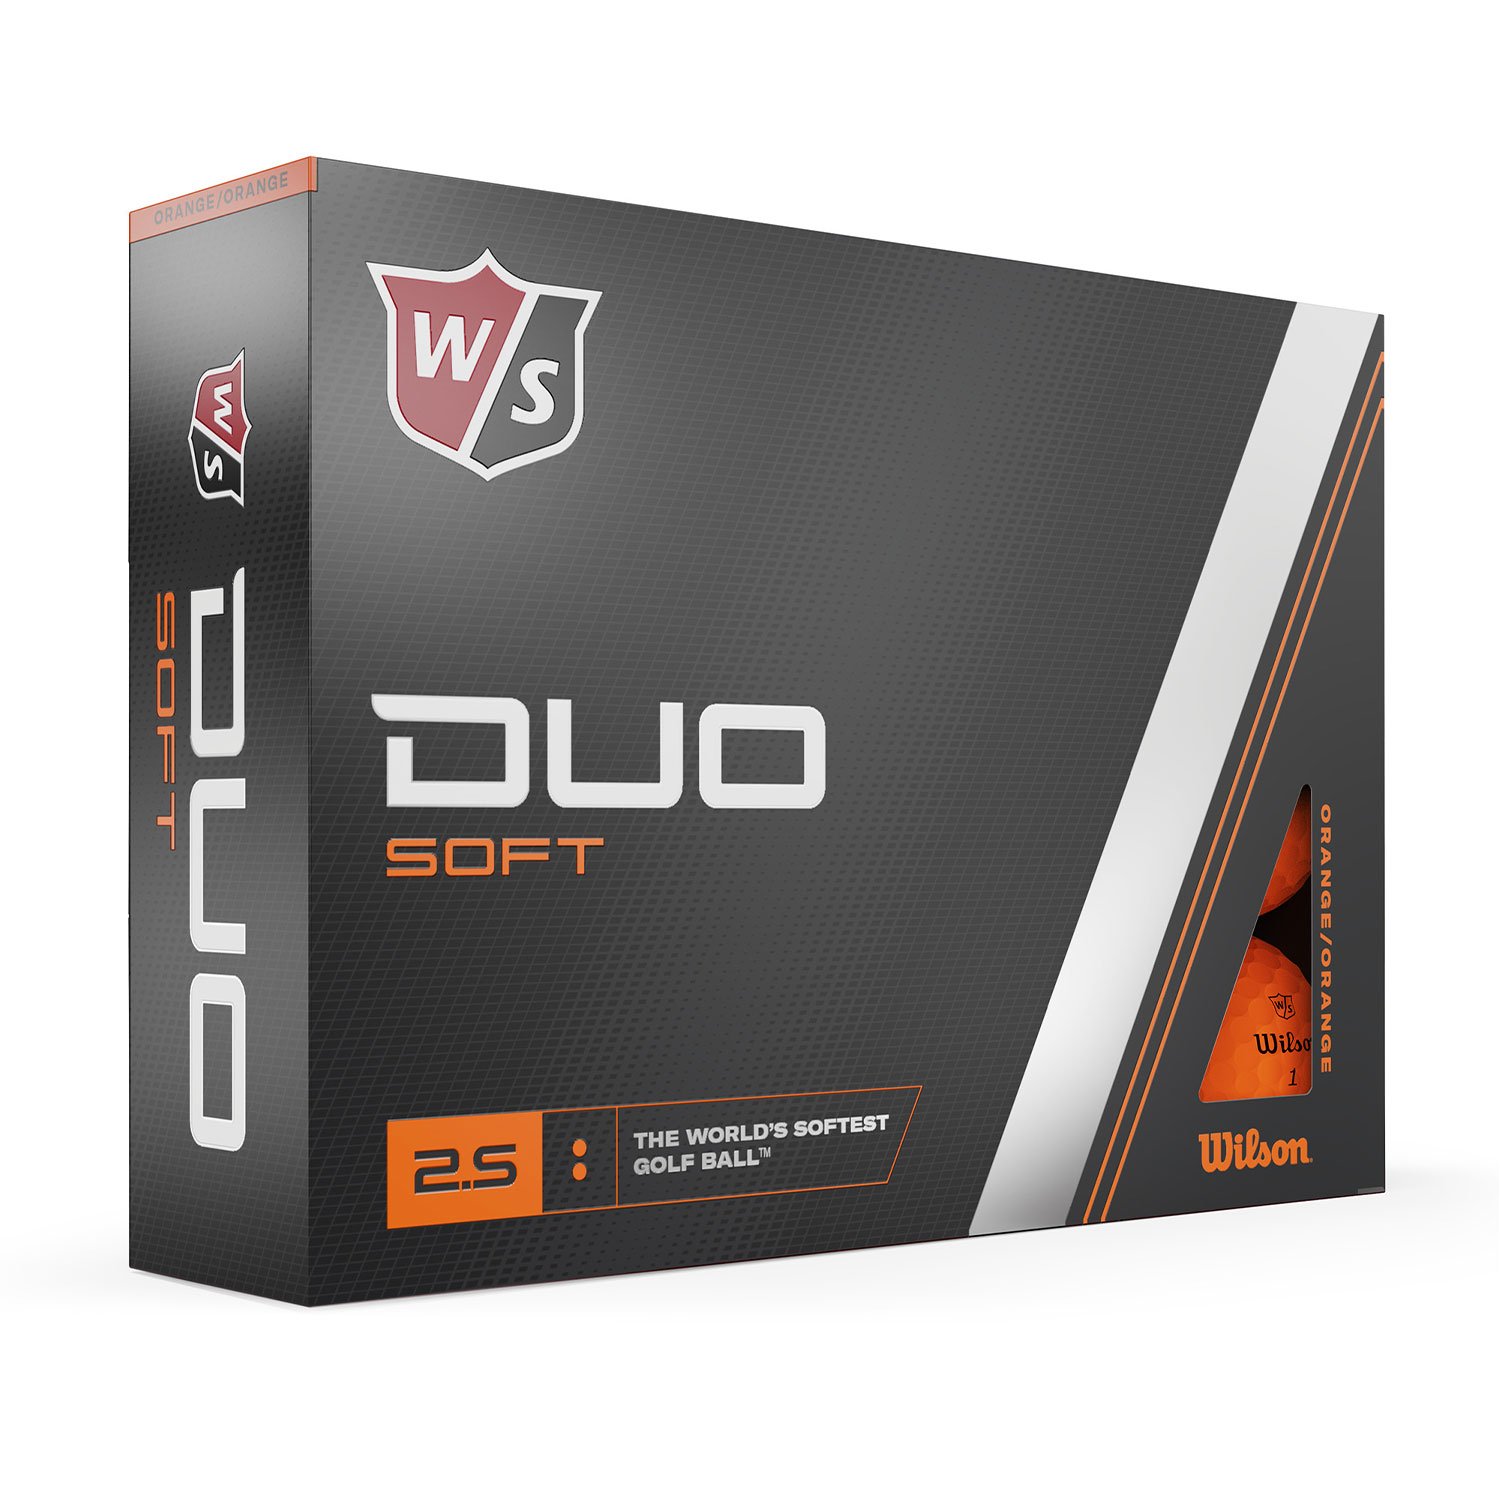 W/S Duo Soft 12-Ball